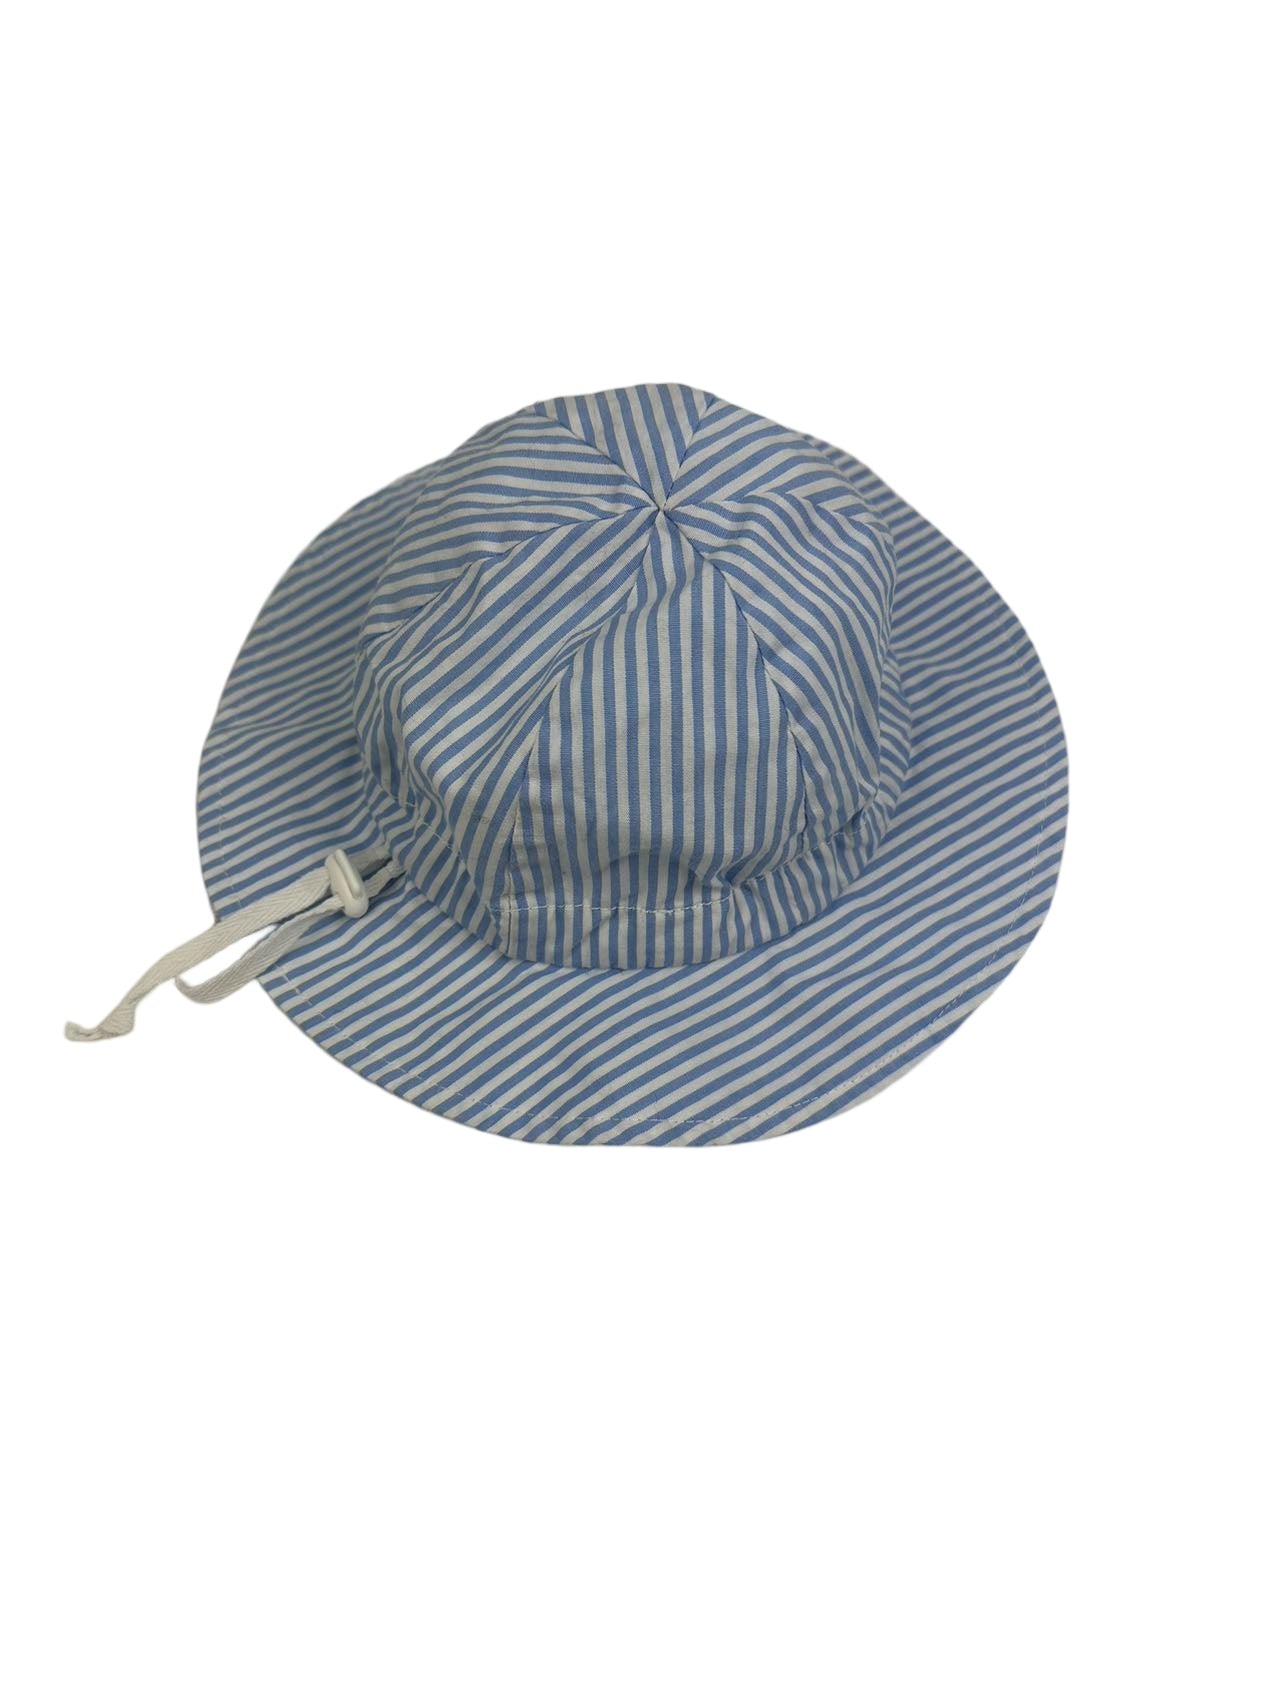 Adjustable Summer hat(6-12M)